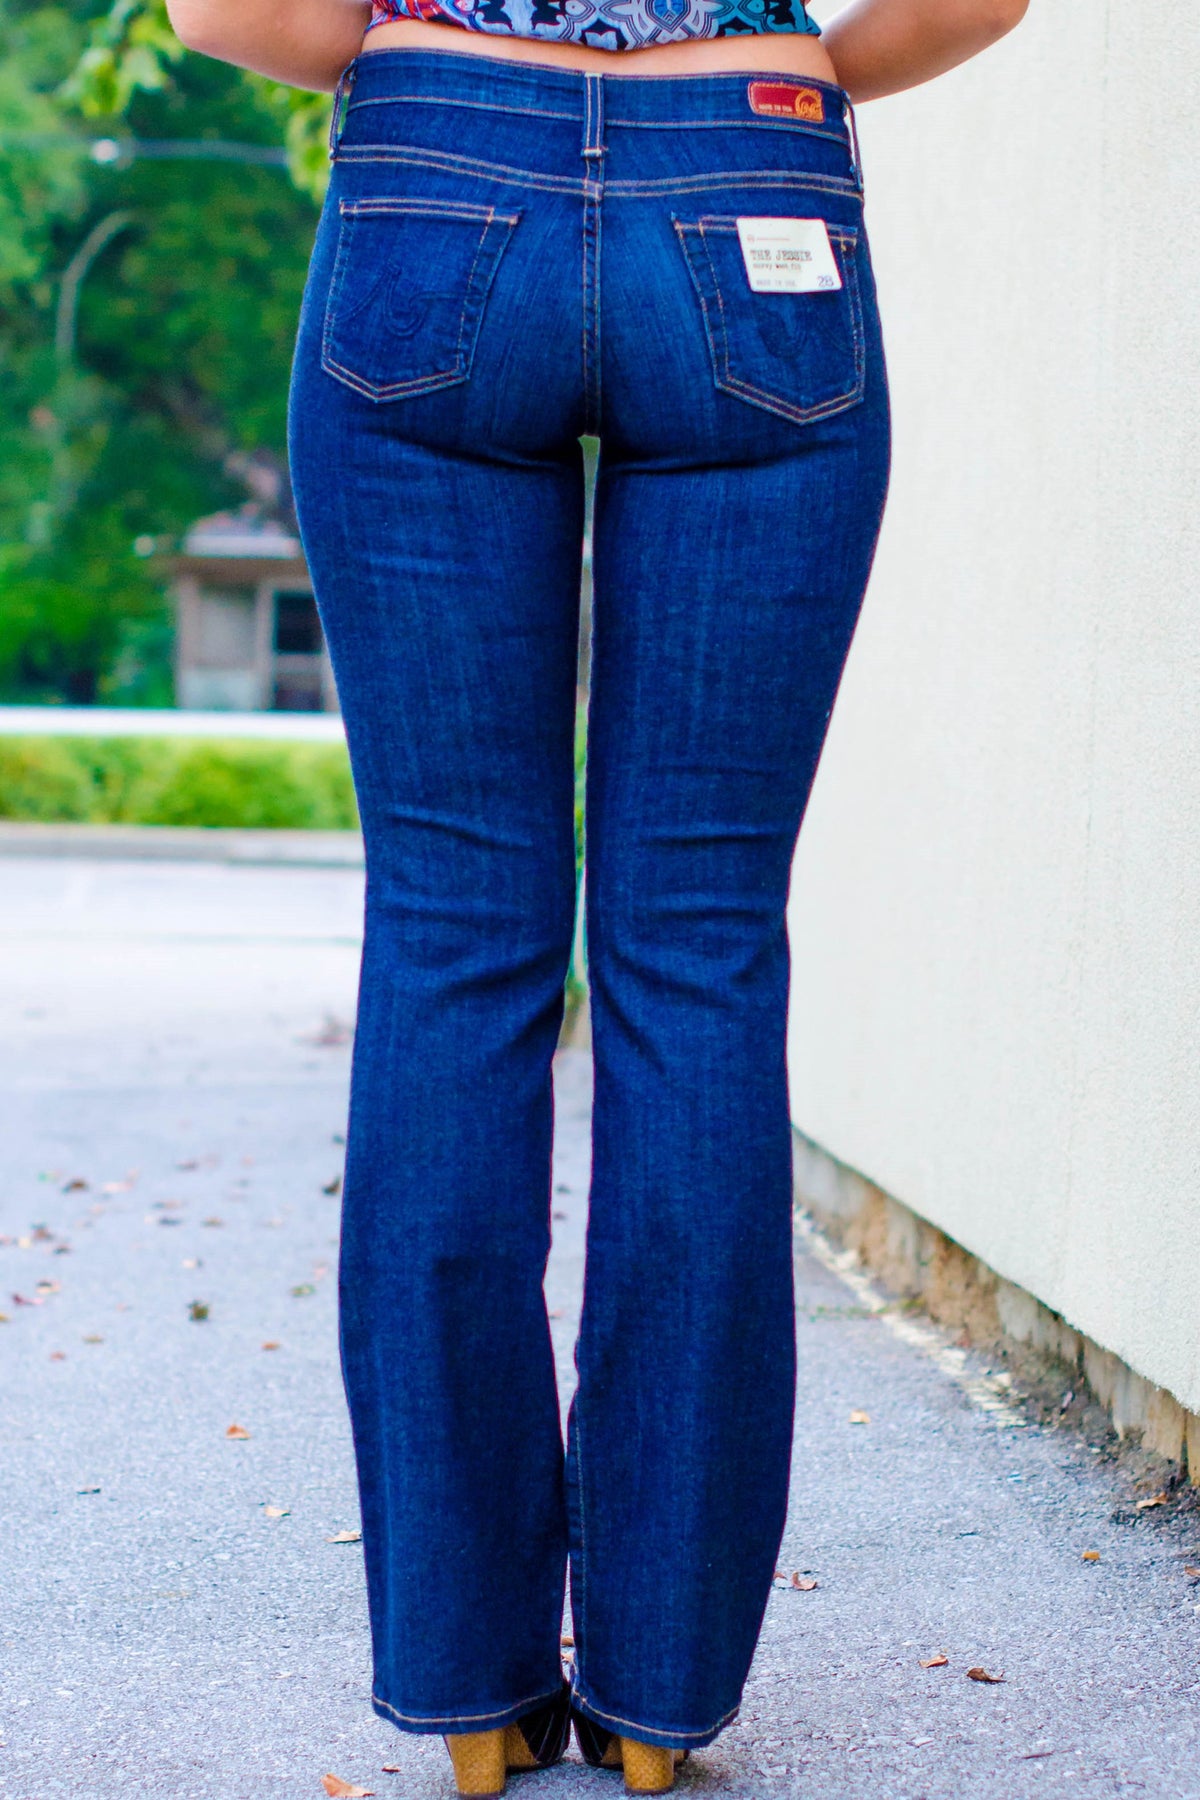 AG Jeans: Jessie Slimming Boot Fit, Dark Blue